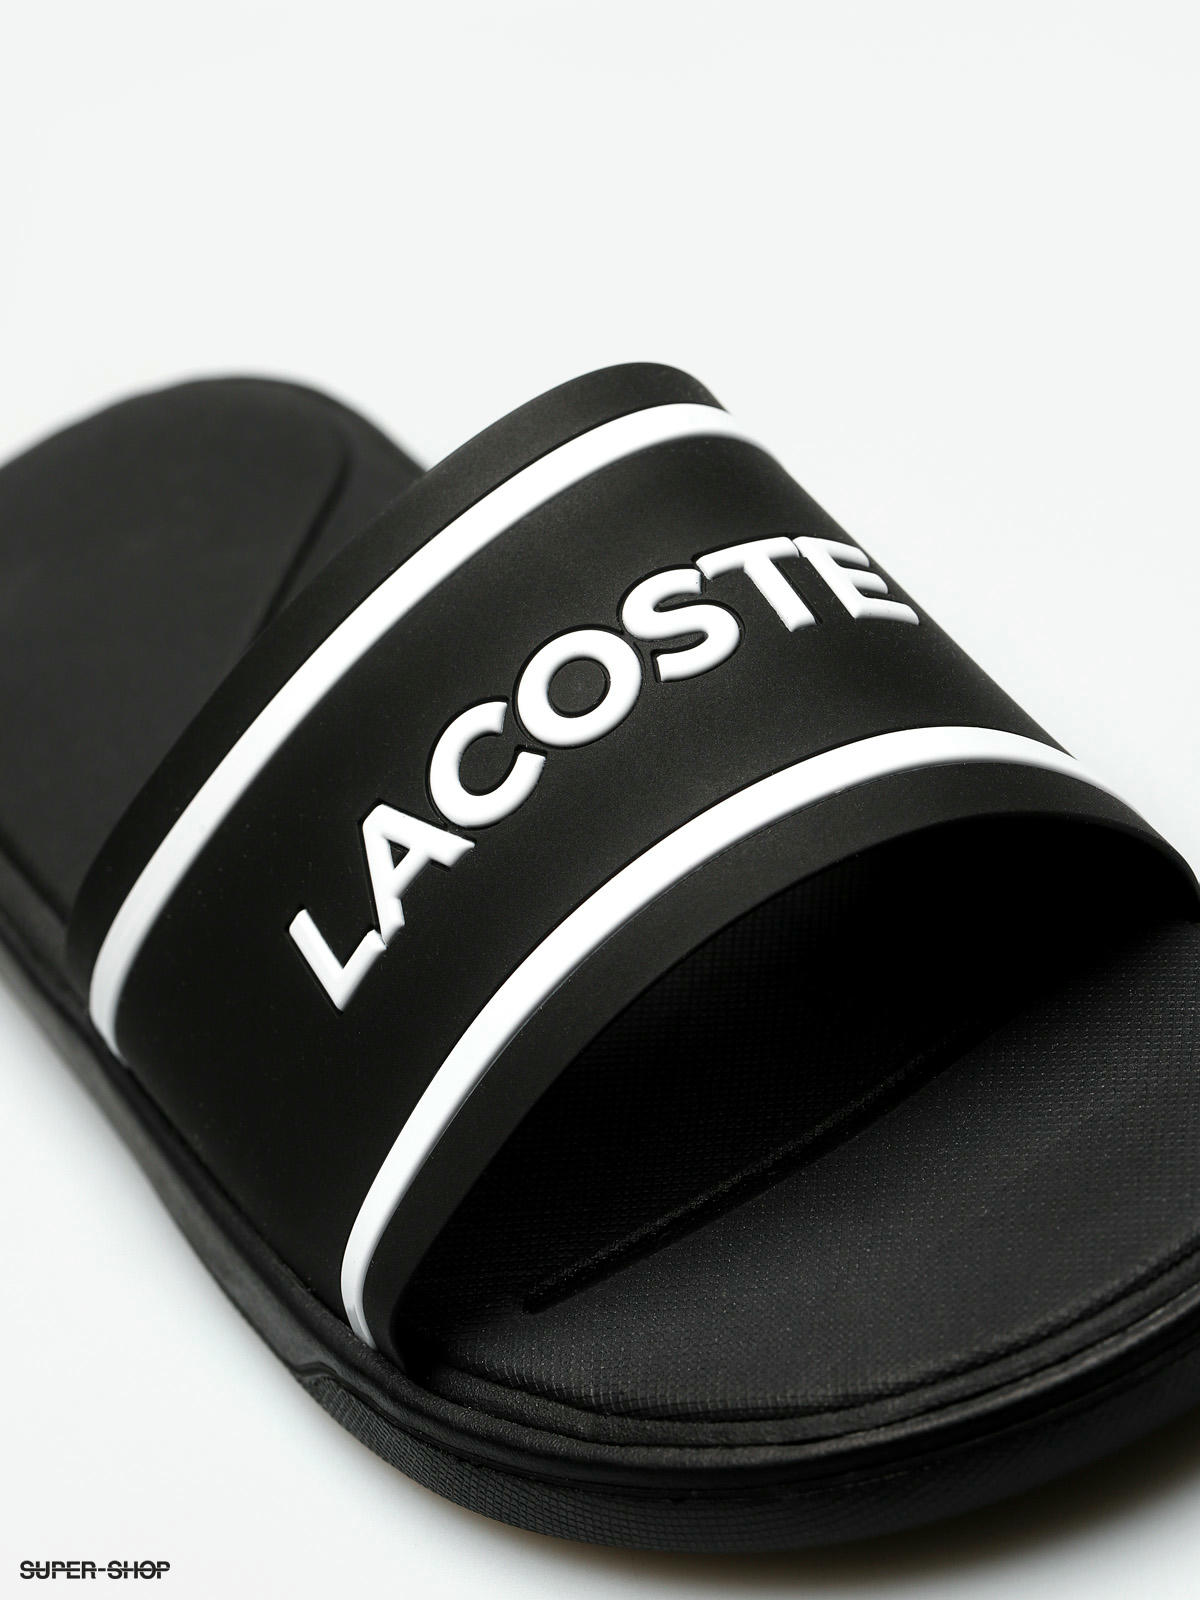 lacoste slides white